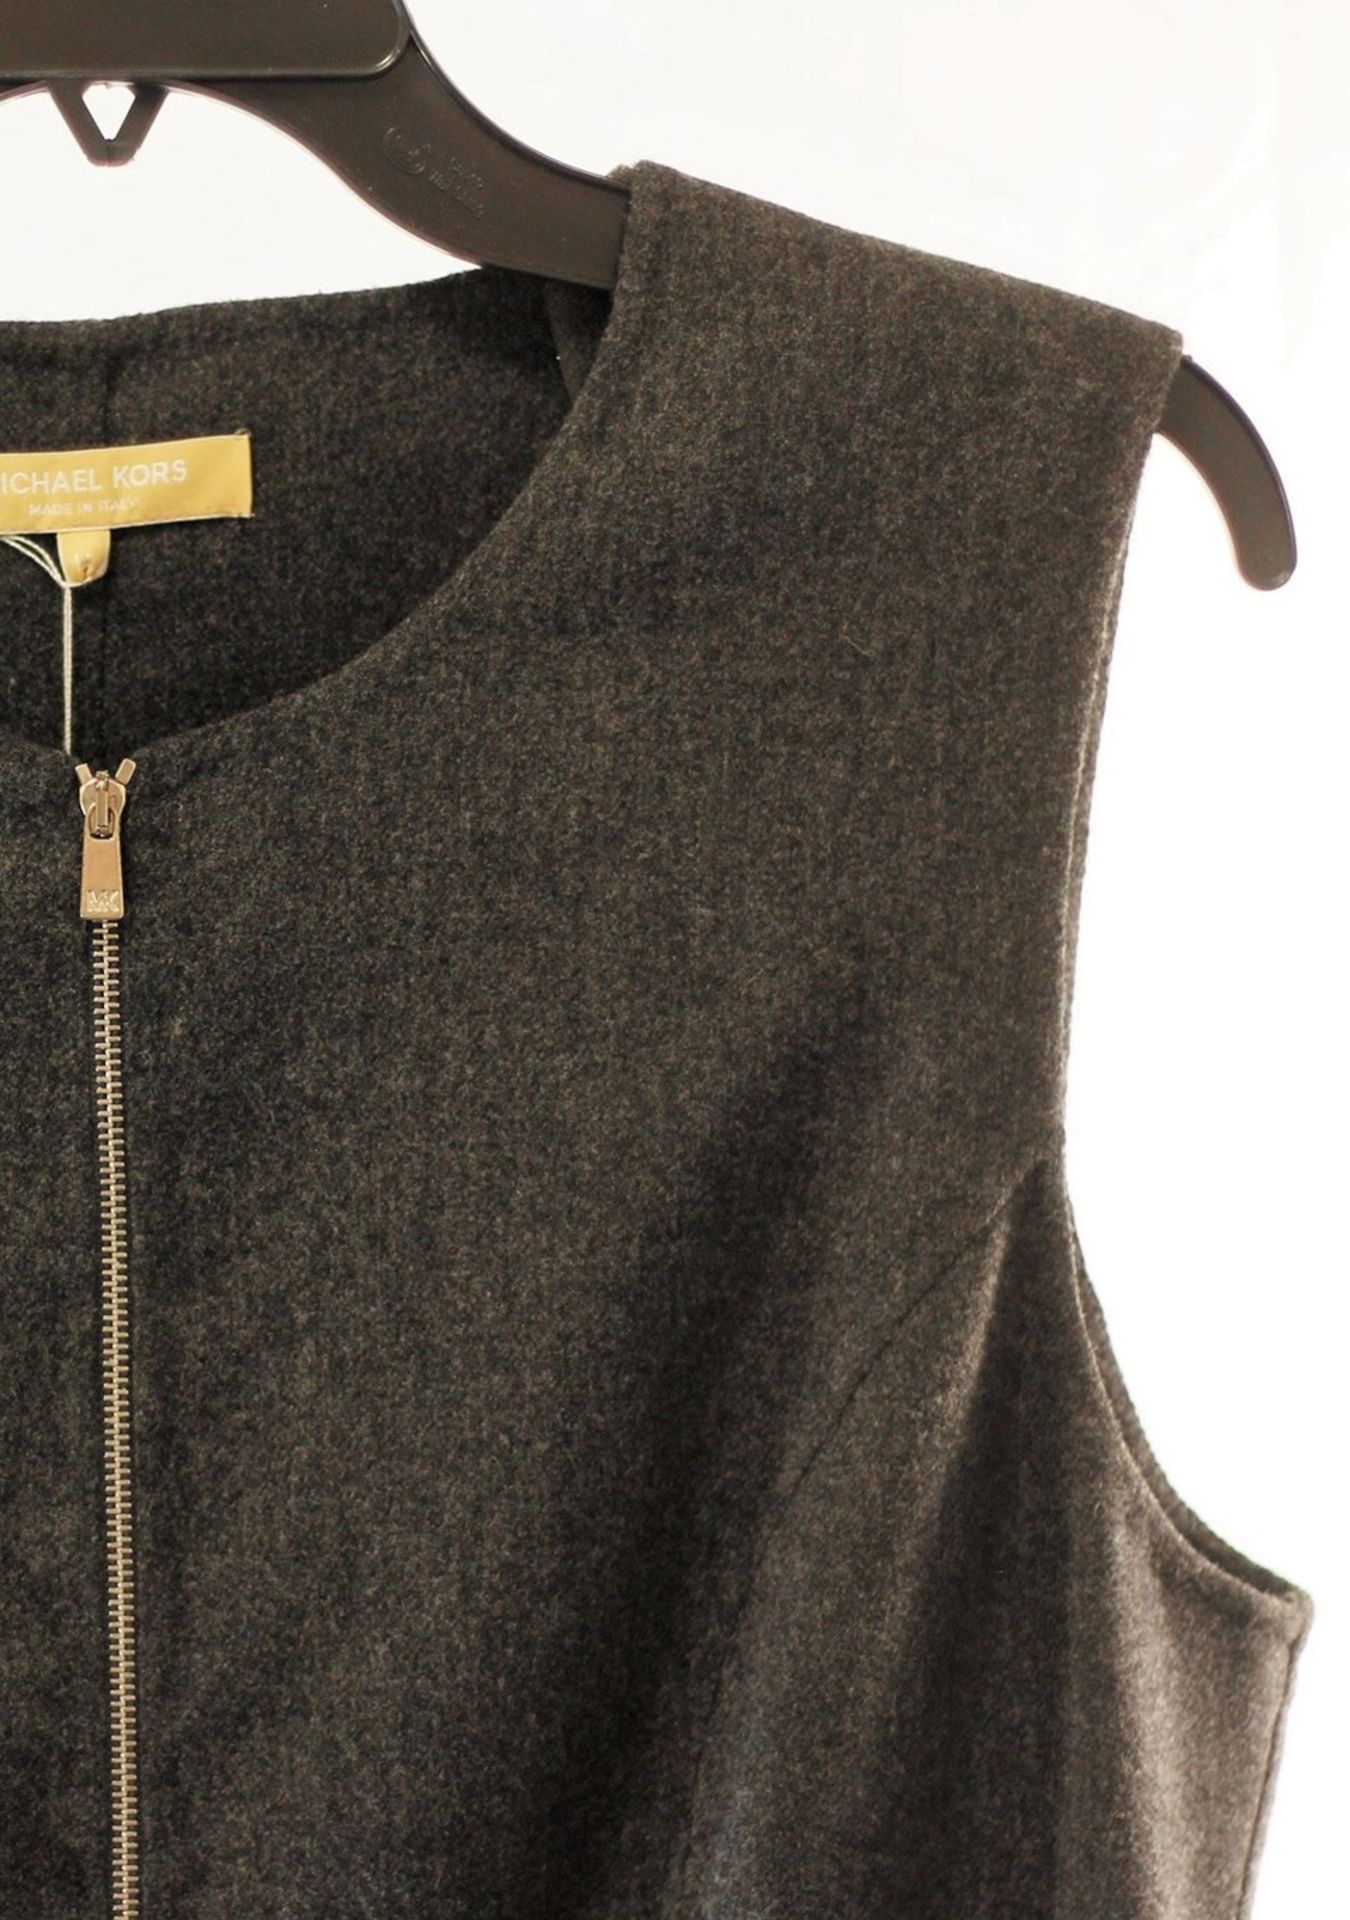 1 x Michael Kors Grey Dress - Size: 14 - Material: 97% Virgin Wool, 2% Spandex, 1% Elastic - Image 3 of 5